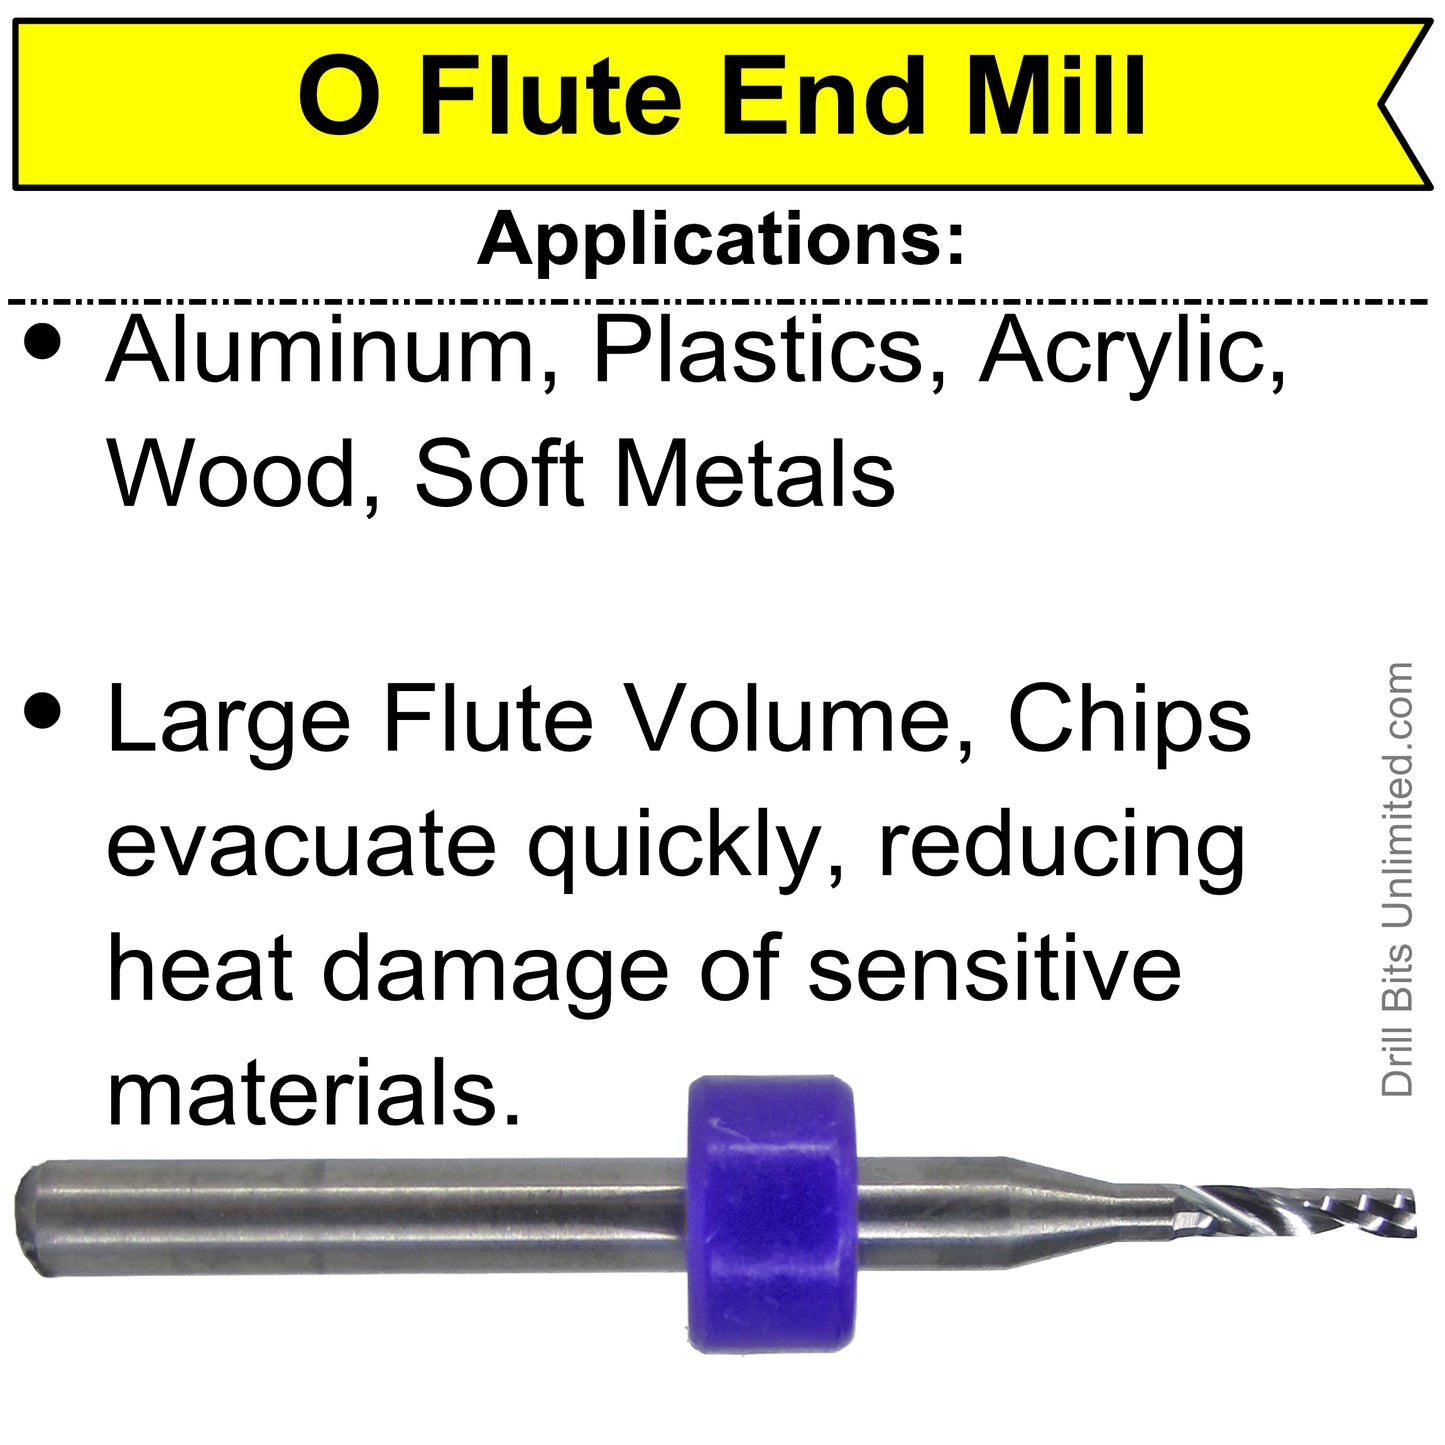 1.50mm Diameter x 12mm Depth O-Flute Titanium Coated - Carbide End Mill M130